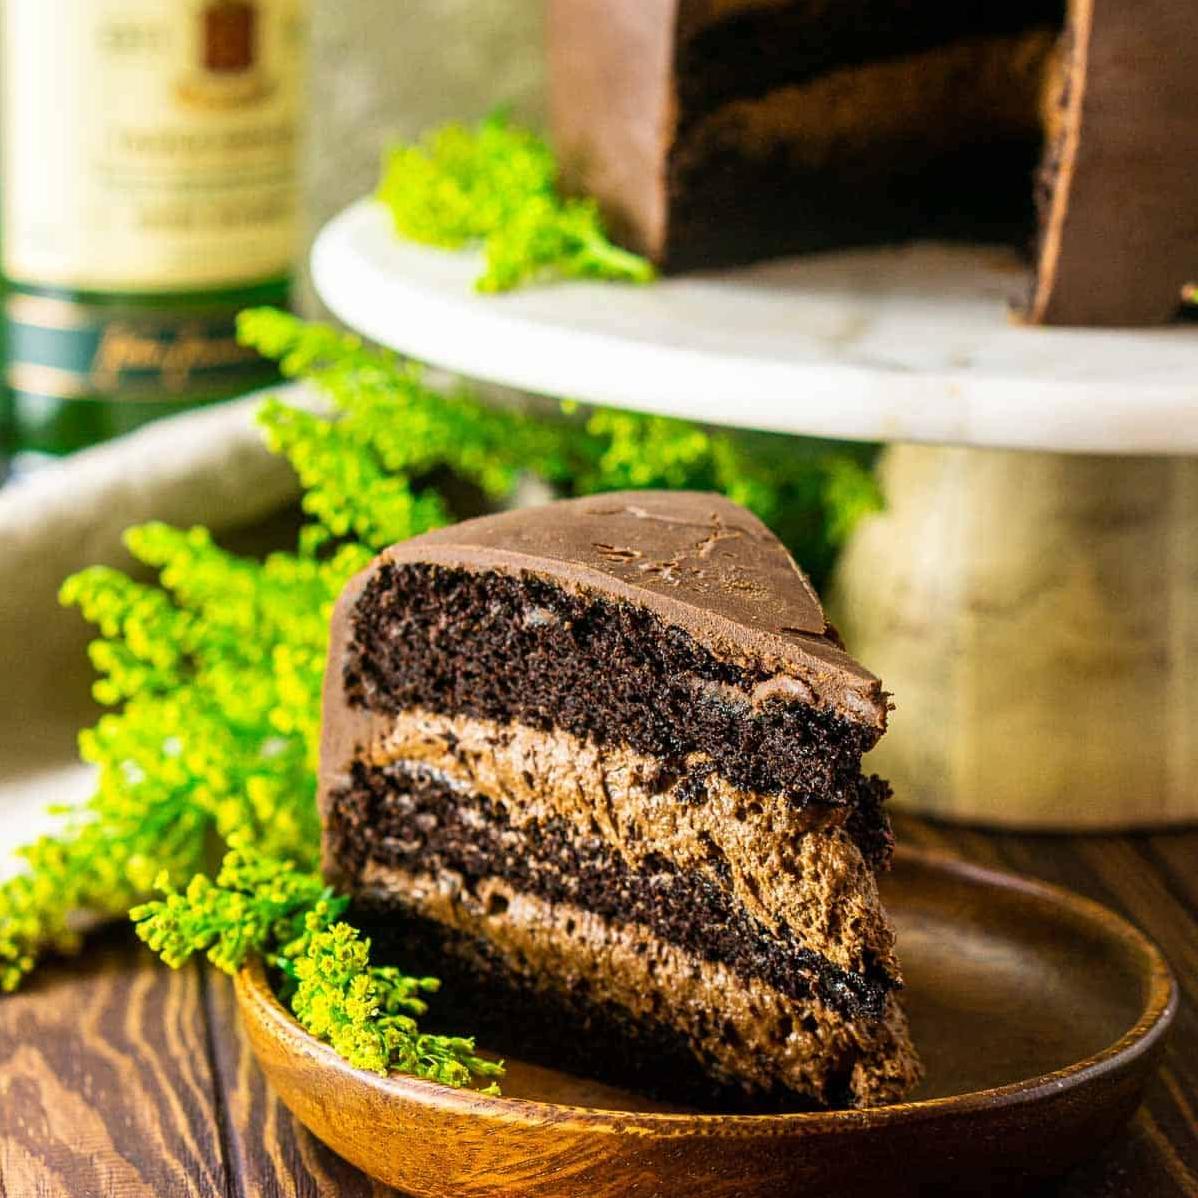  Every bite of this Irish Chocolate Cake will transport you to the Emerald Isle